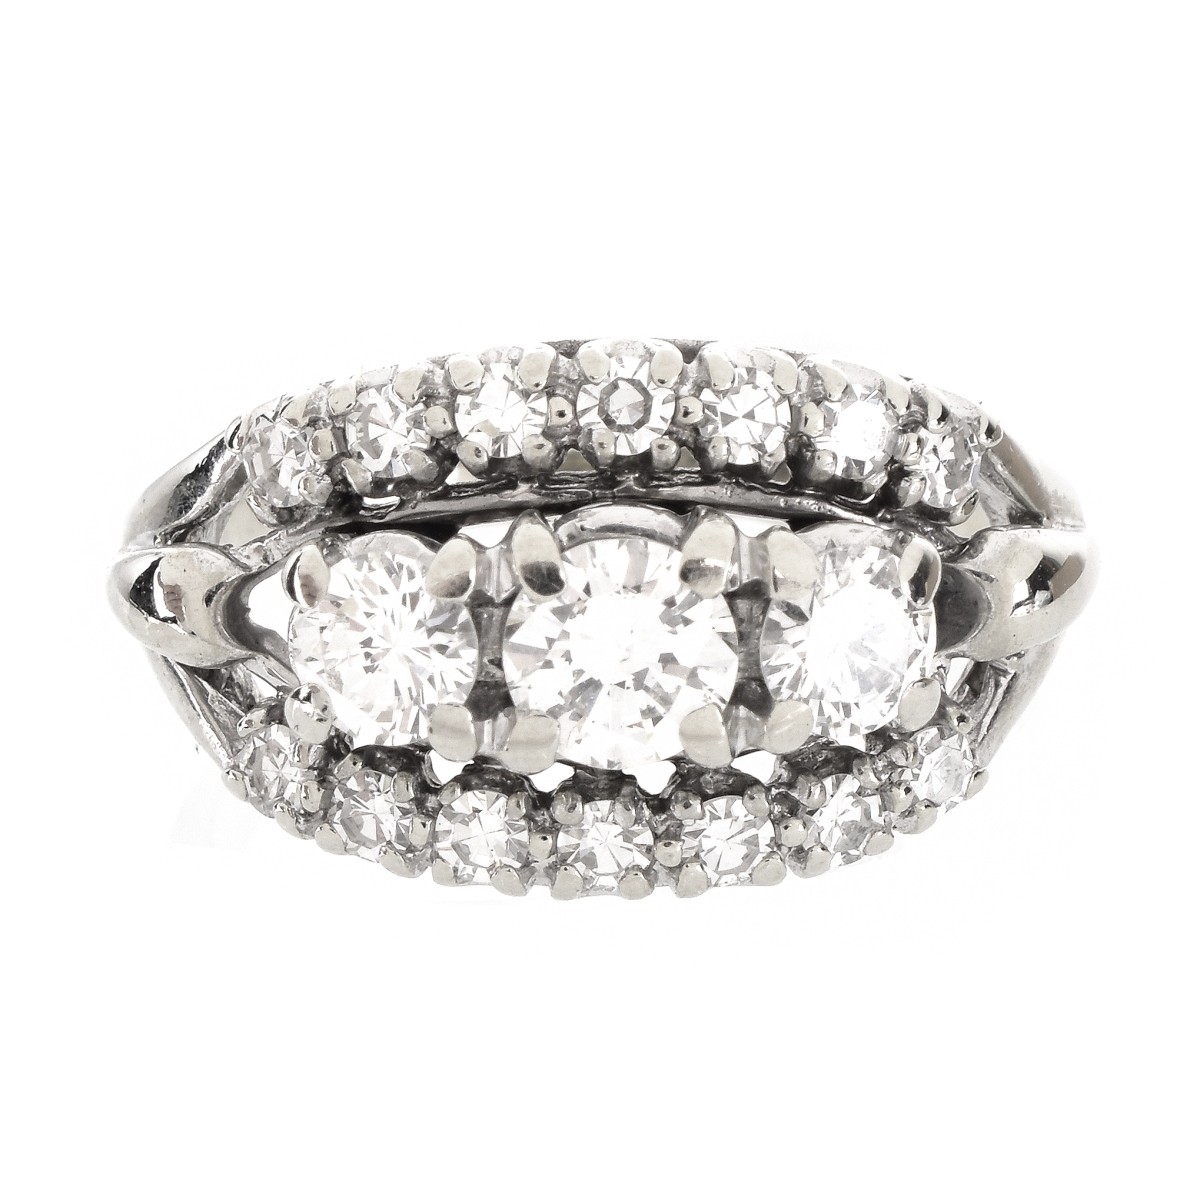 Circa 1940s Three Diamond Ring